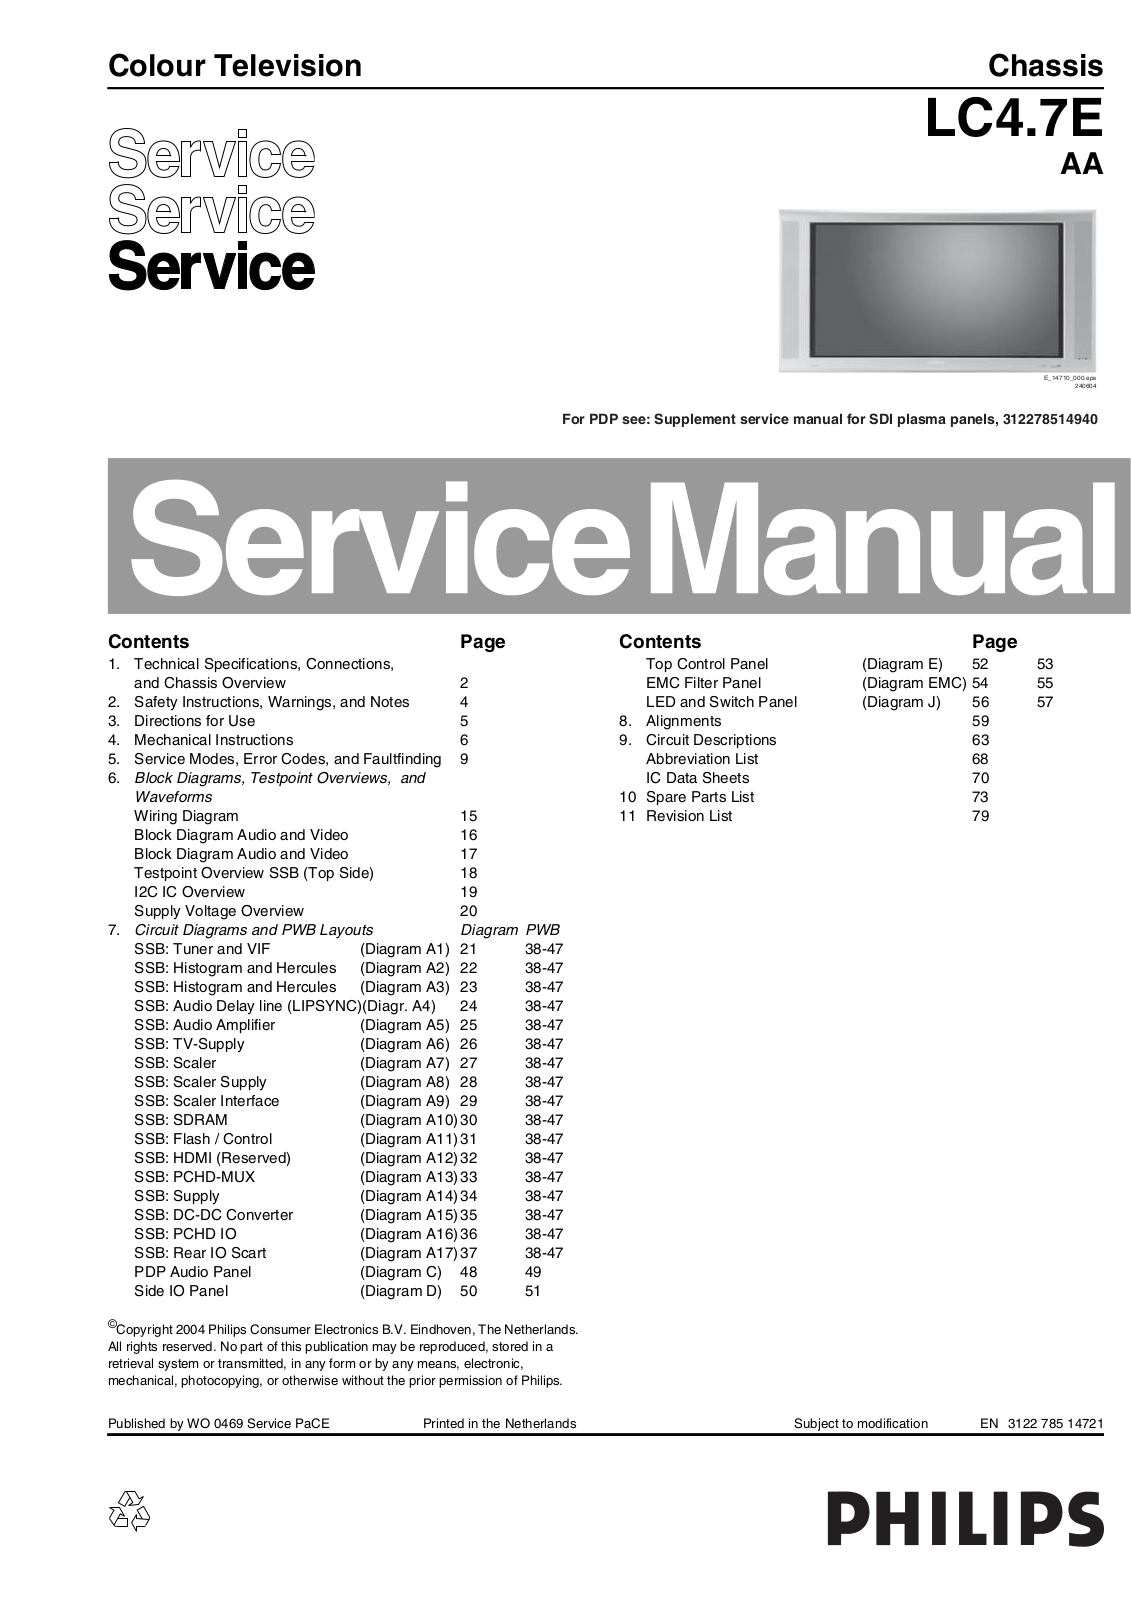 Philips LC4.7E-AA Service Manual